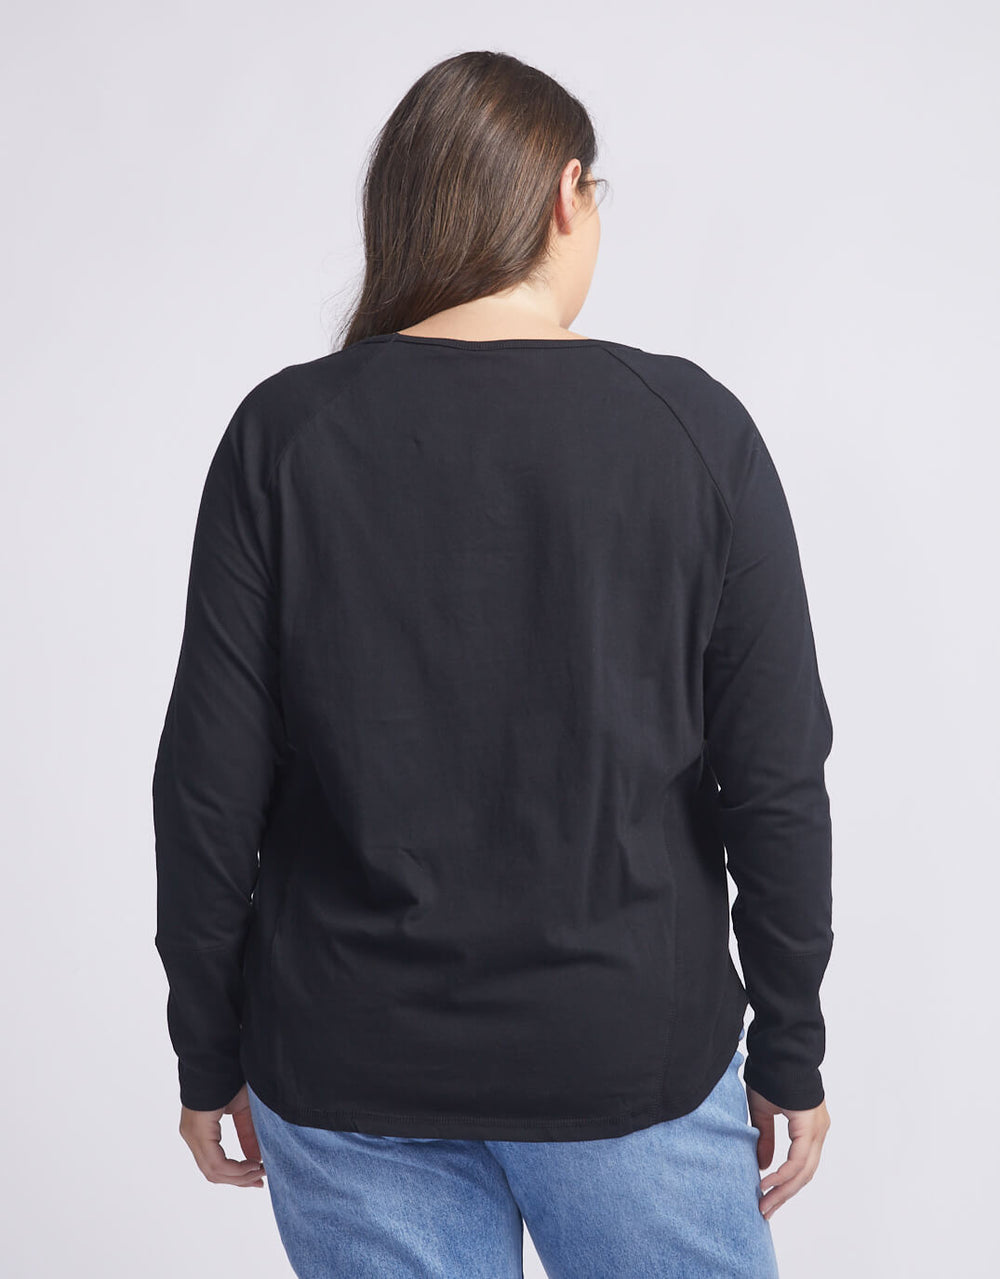 foxwood-plus-size-extend-long-sleeve-tee-washed-black-womens-plus-size-clothing